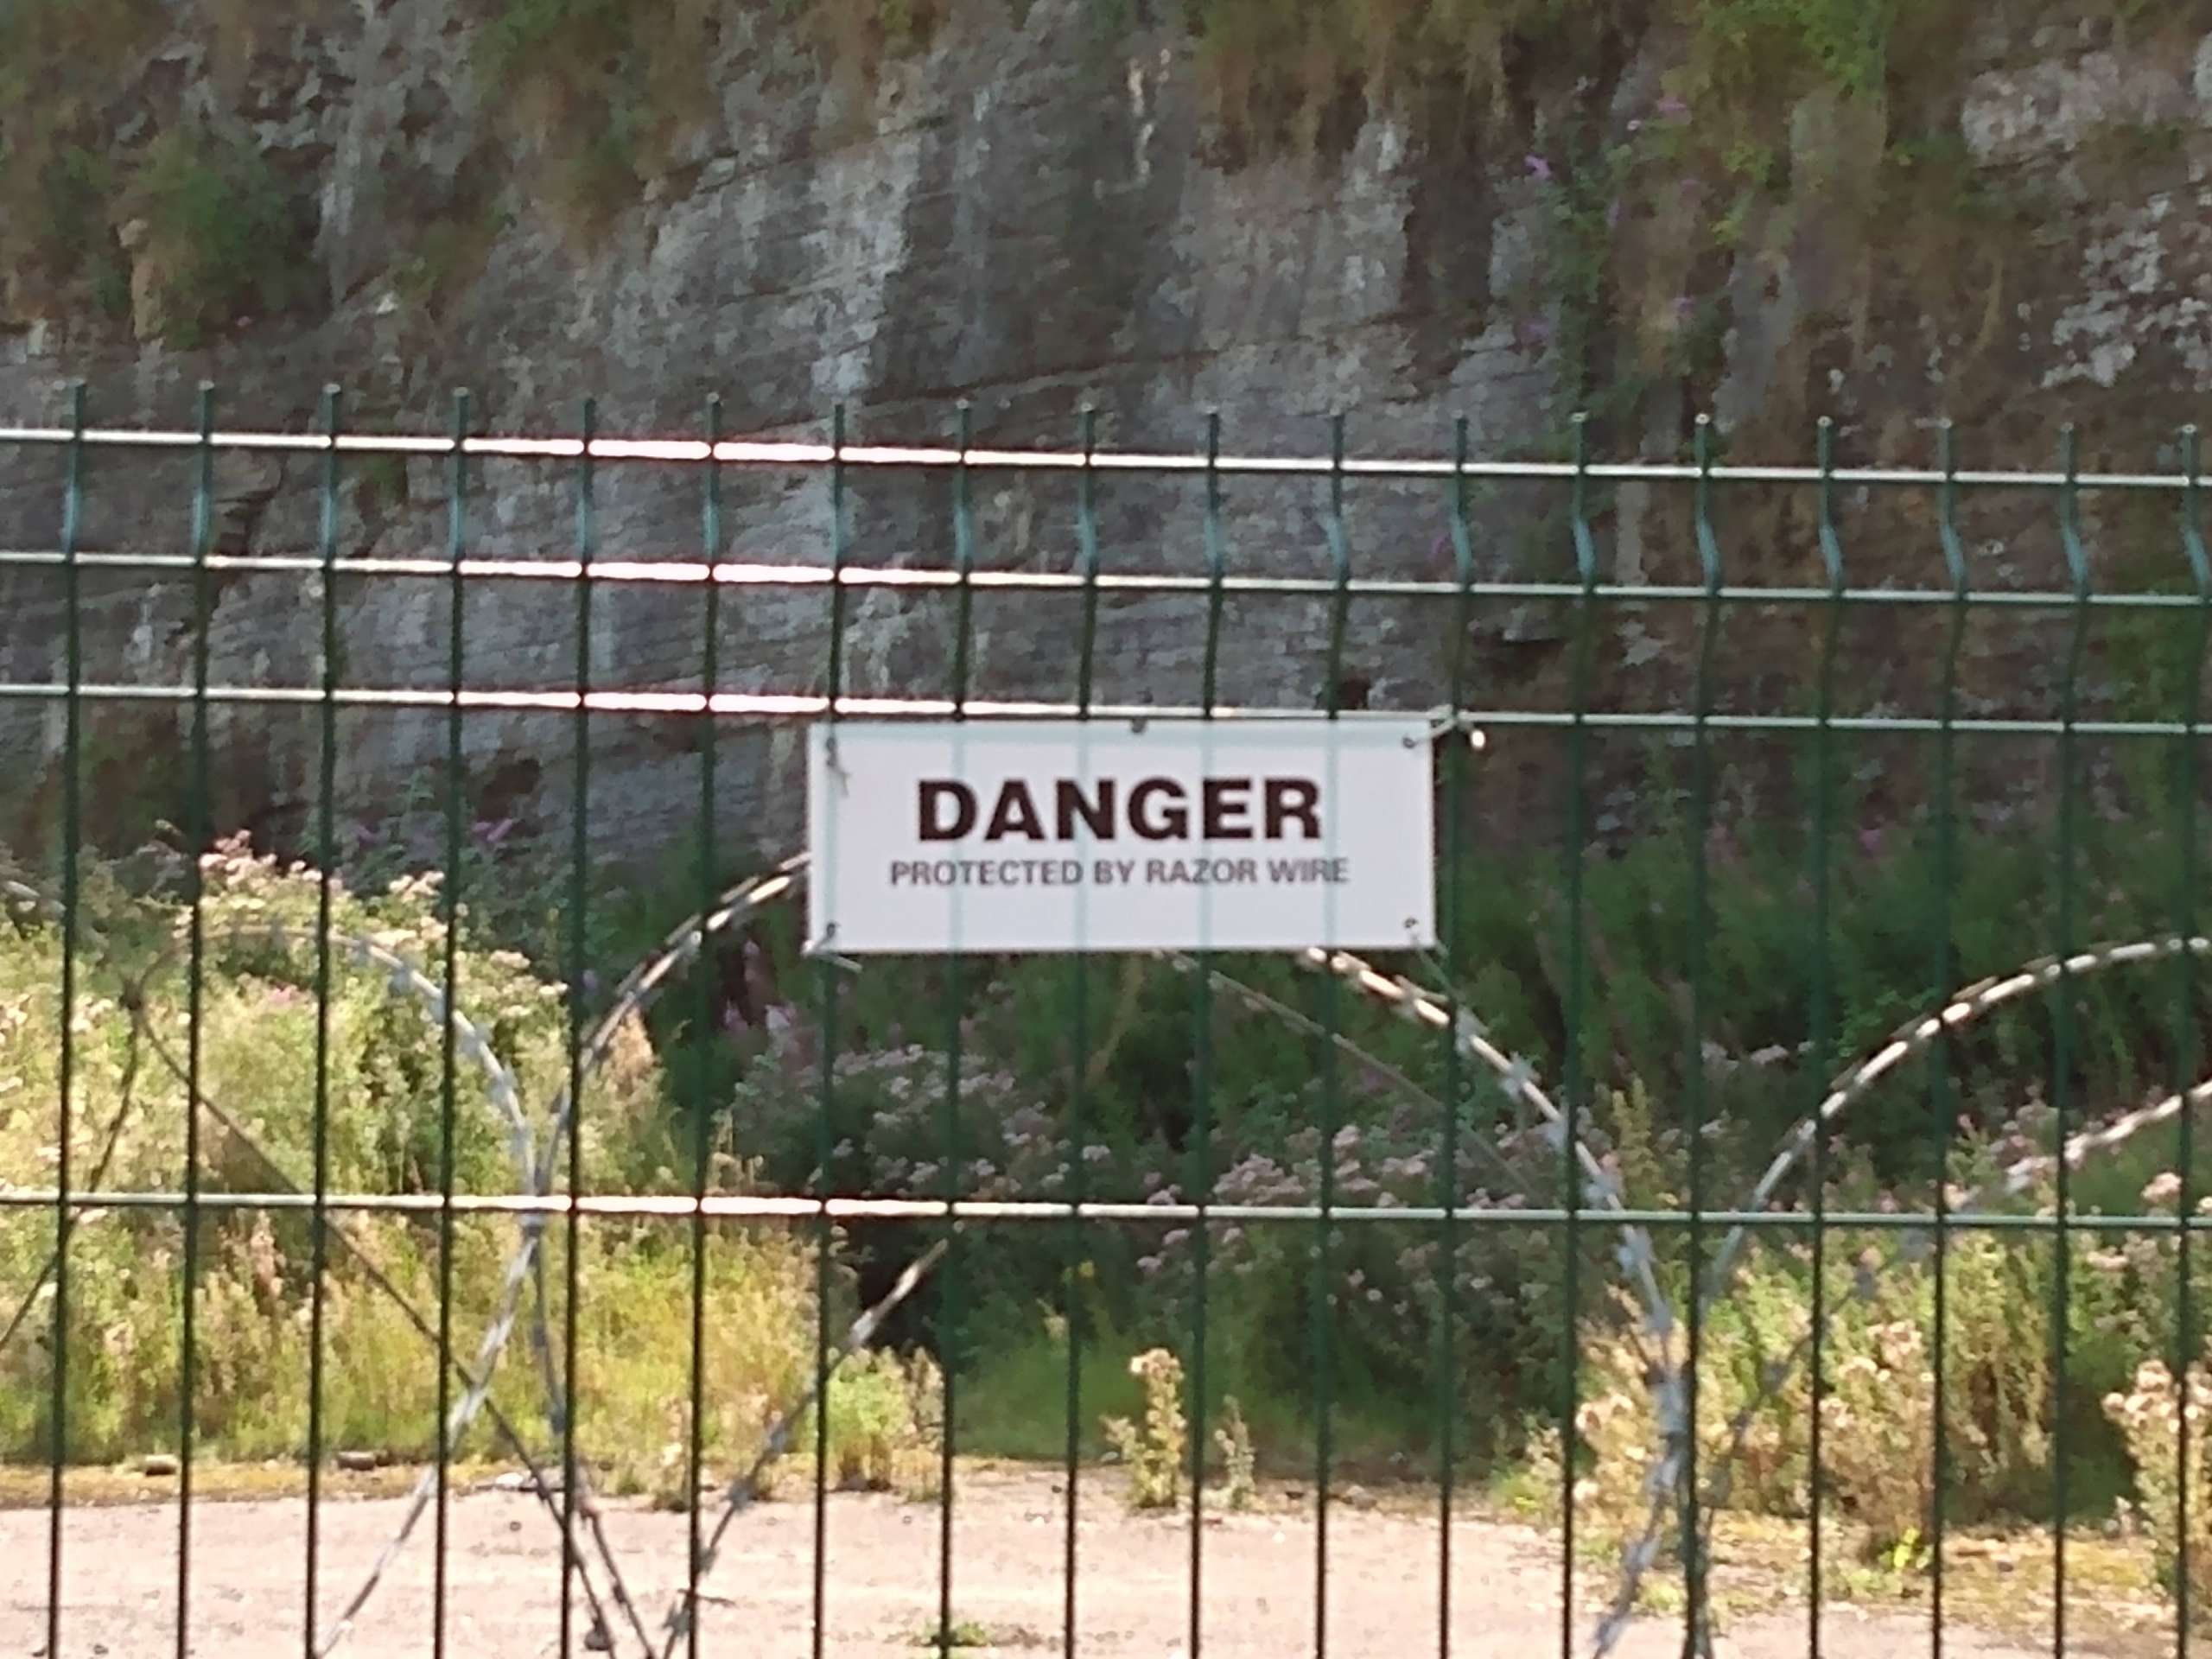 Cyfarthfa blast furnace- Danger keep out sign